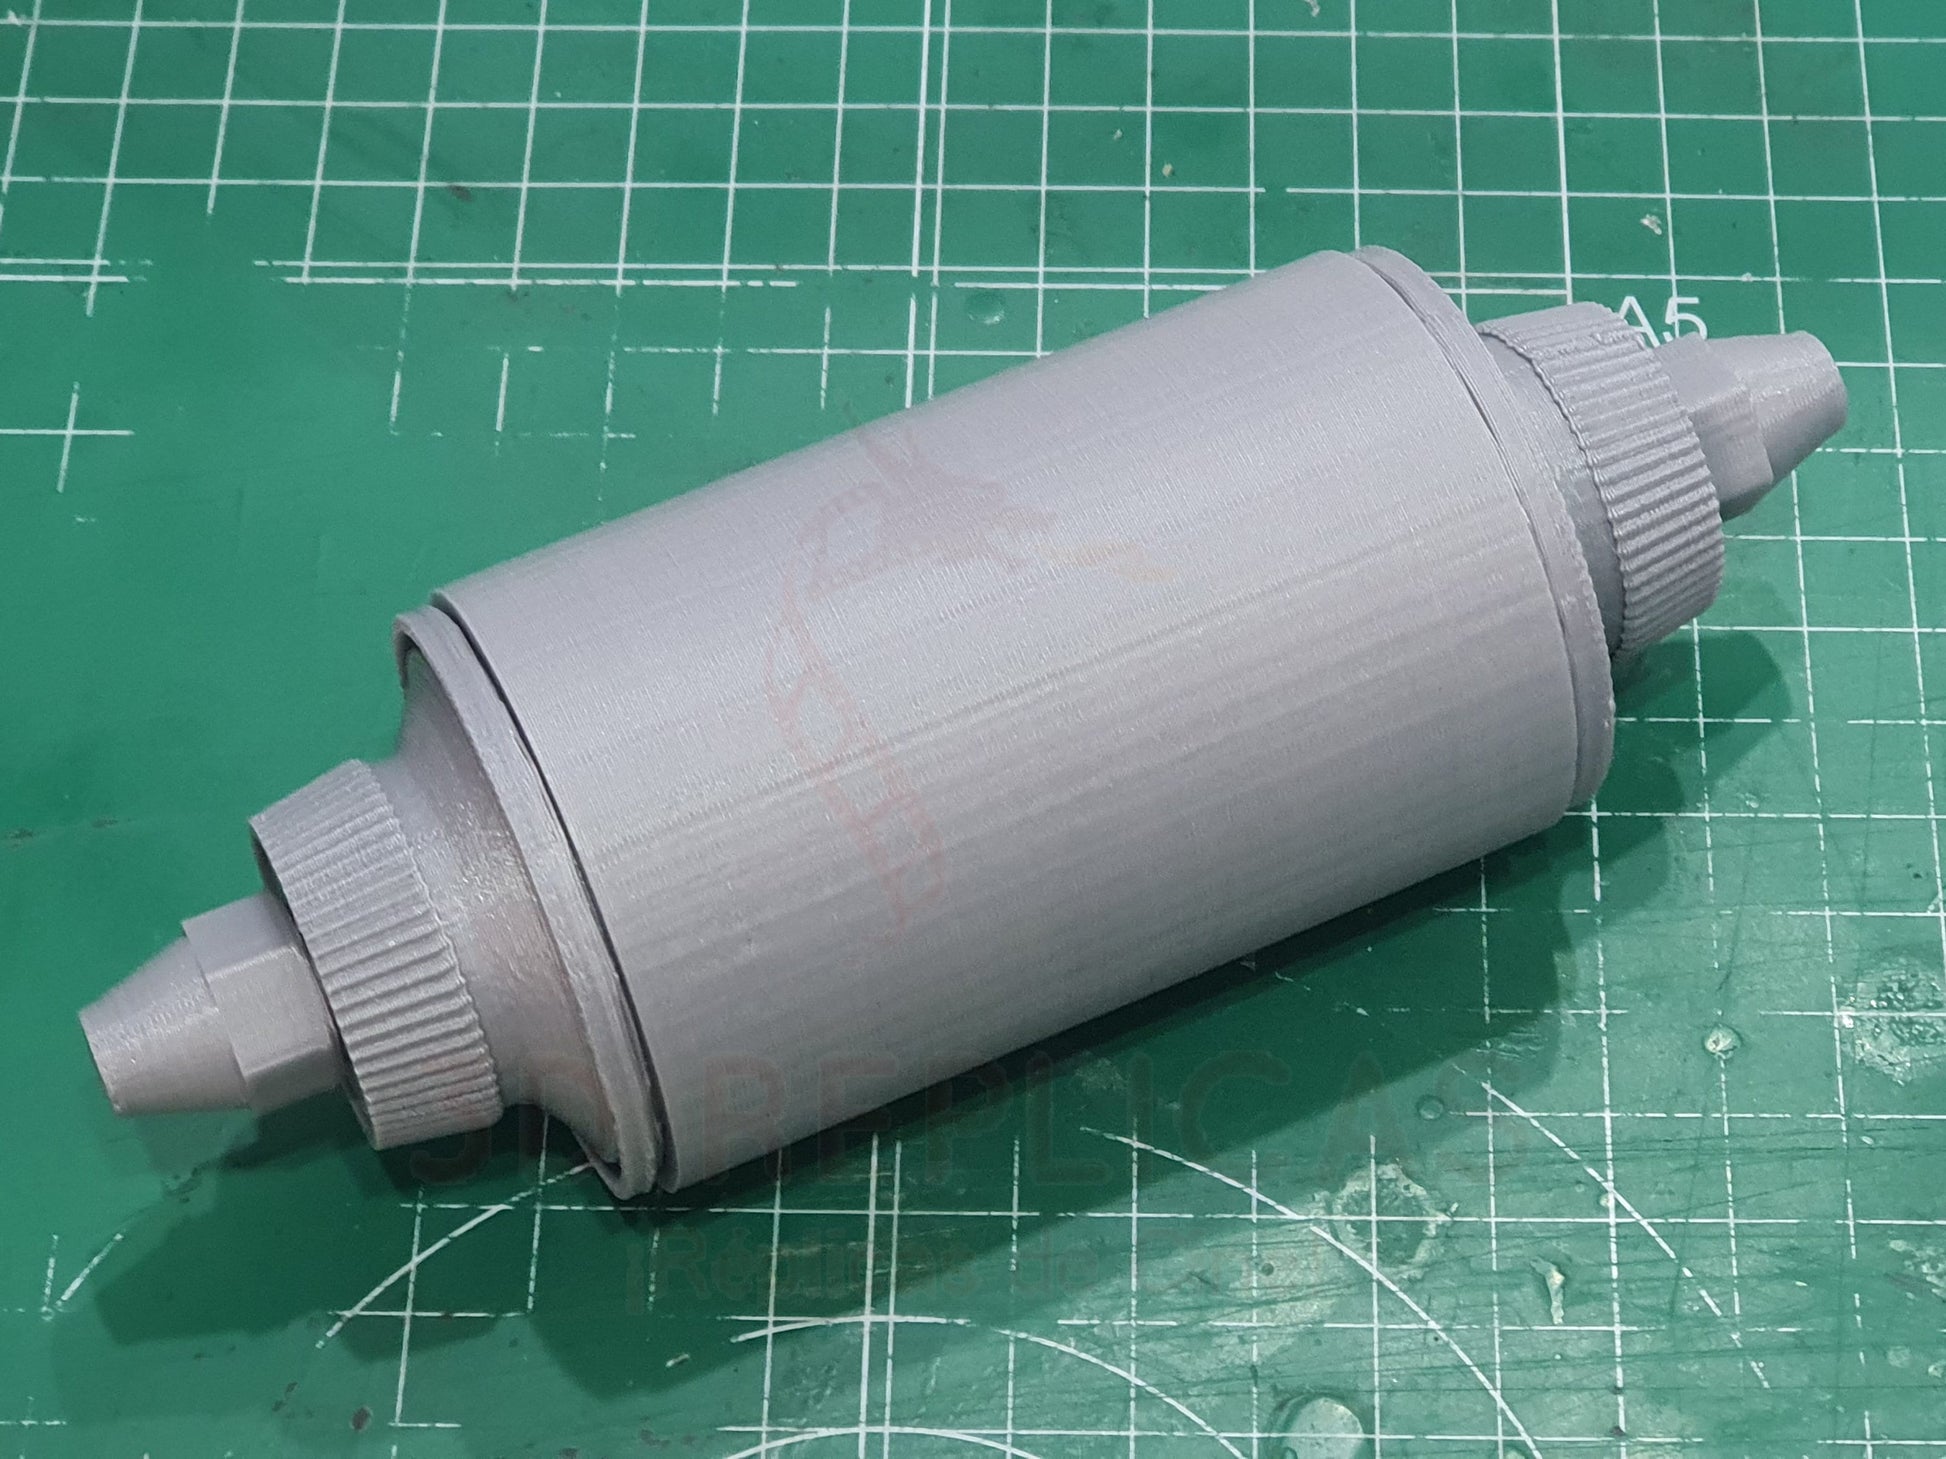 Star Wars Tusken Raider Respirator Accessory Cosplay Prop Replica Kit